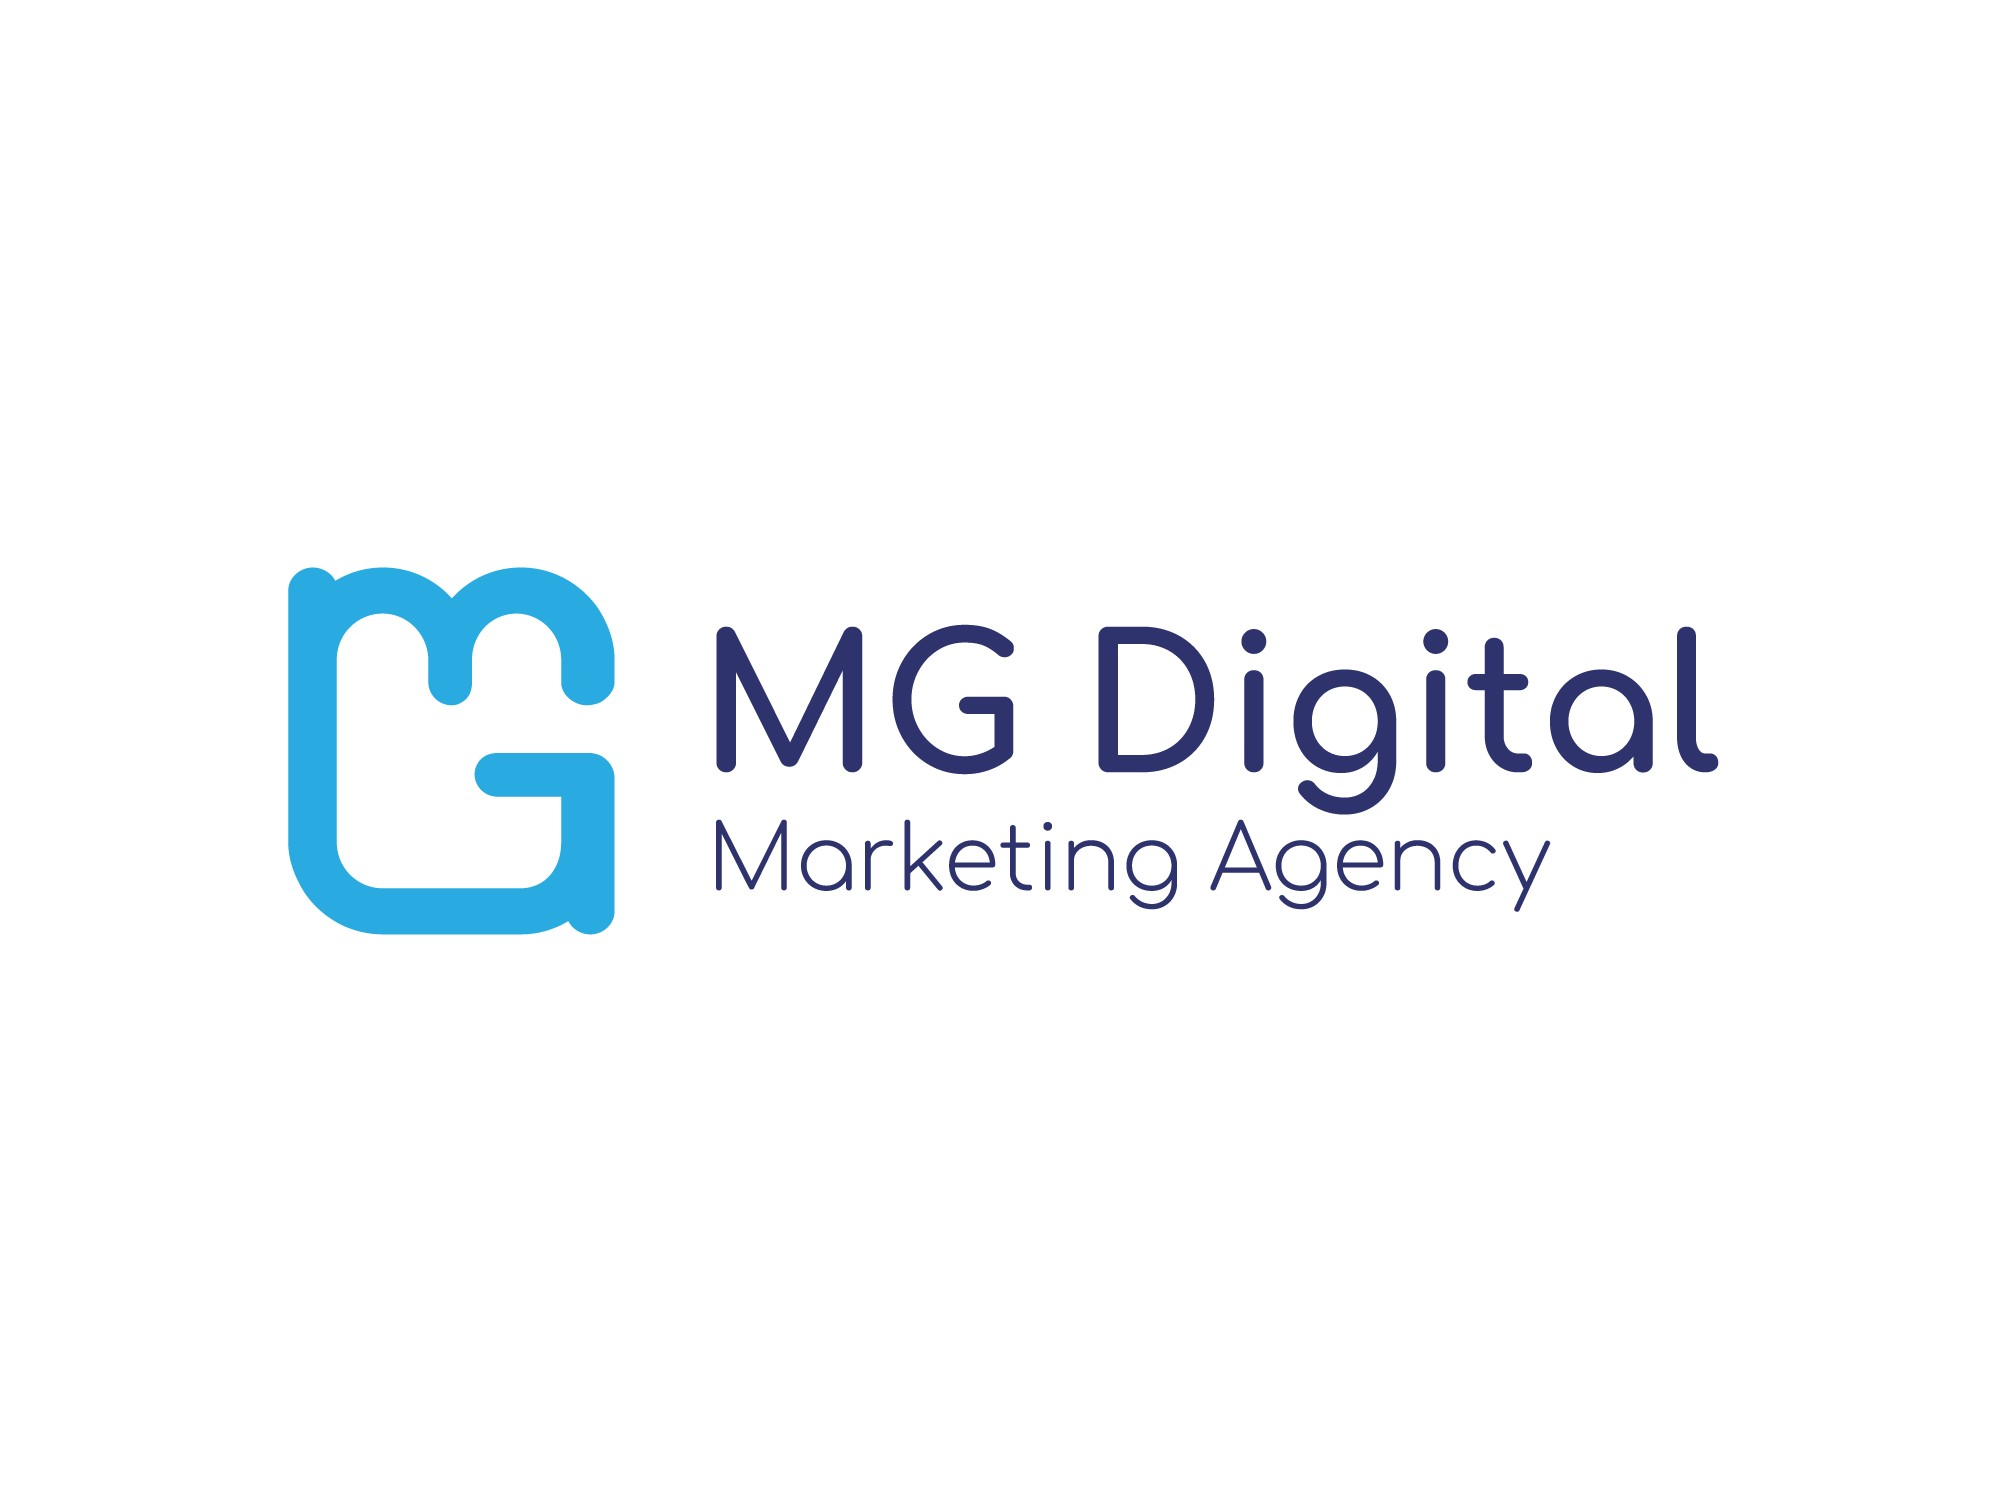 Top Digital Marketing Agency In Cairo Egypt